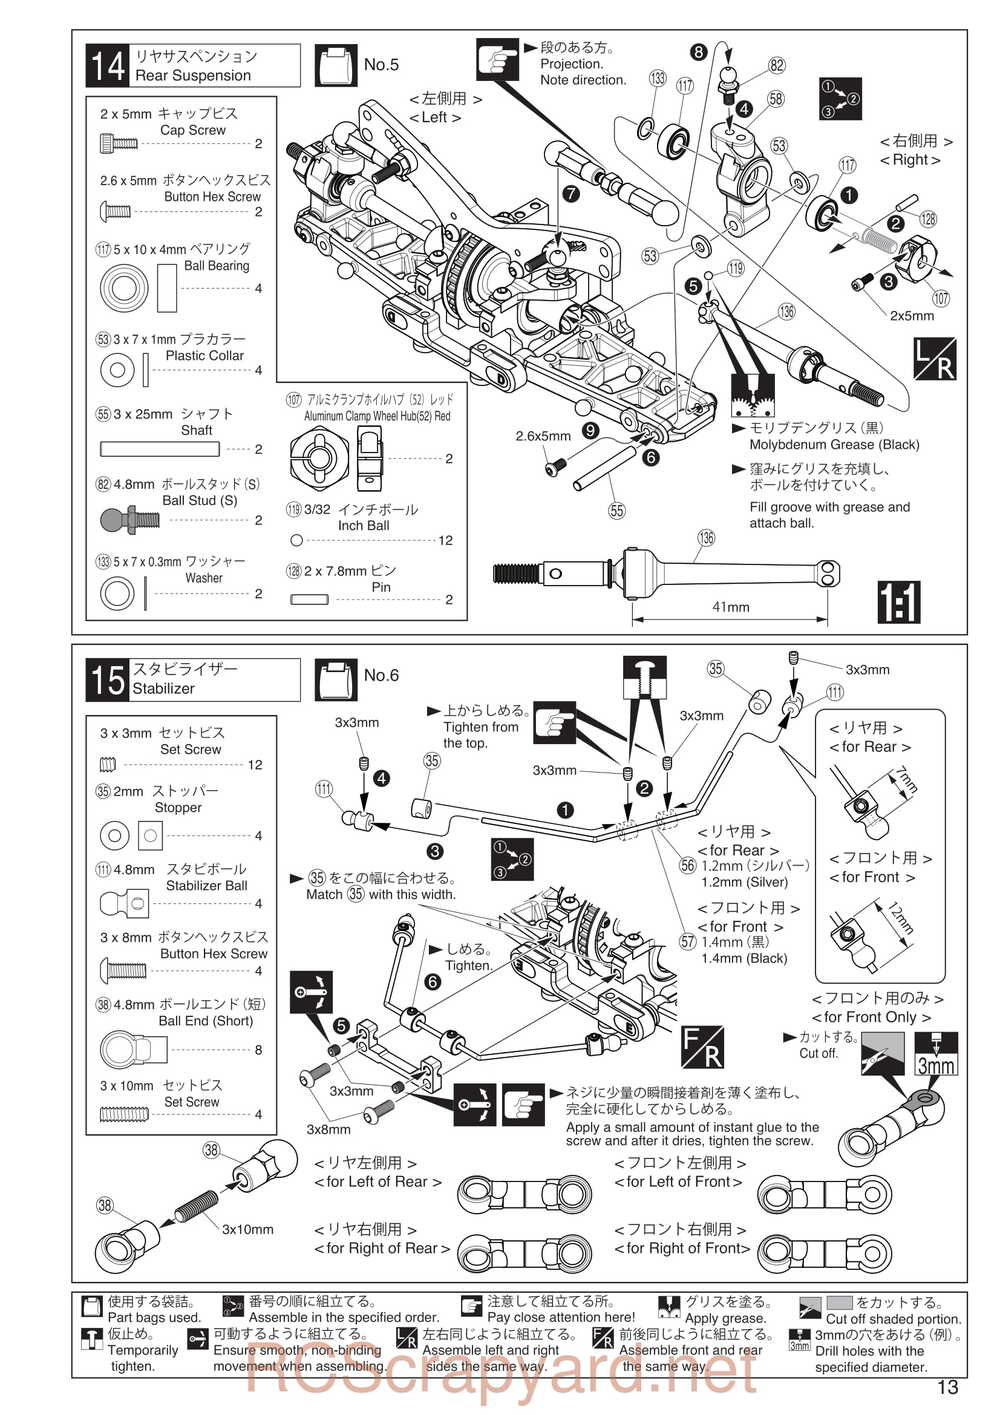 Kyosho - 30024 - TF6 - Manual - Page 13